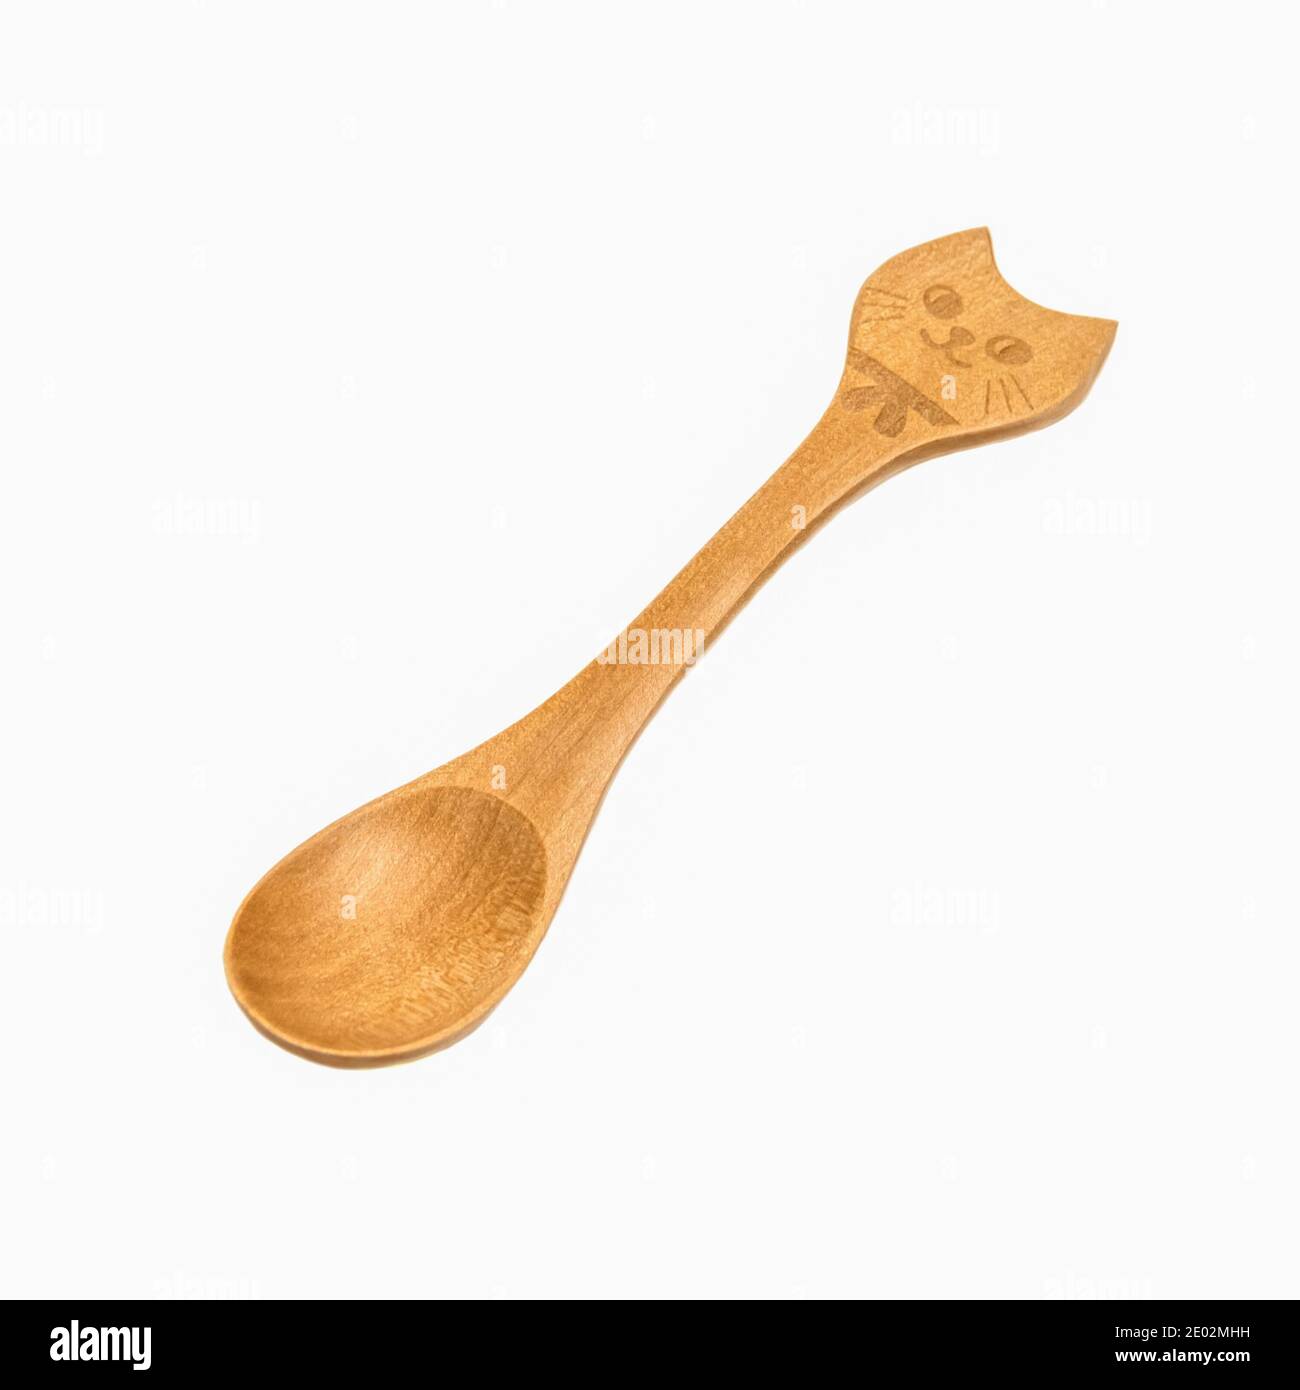 Rivet Setter - L - The Spoon Crank